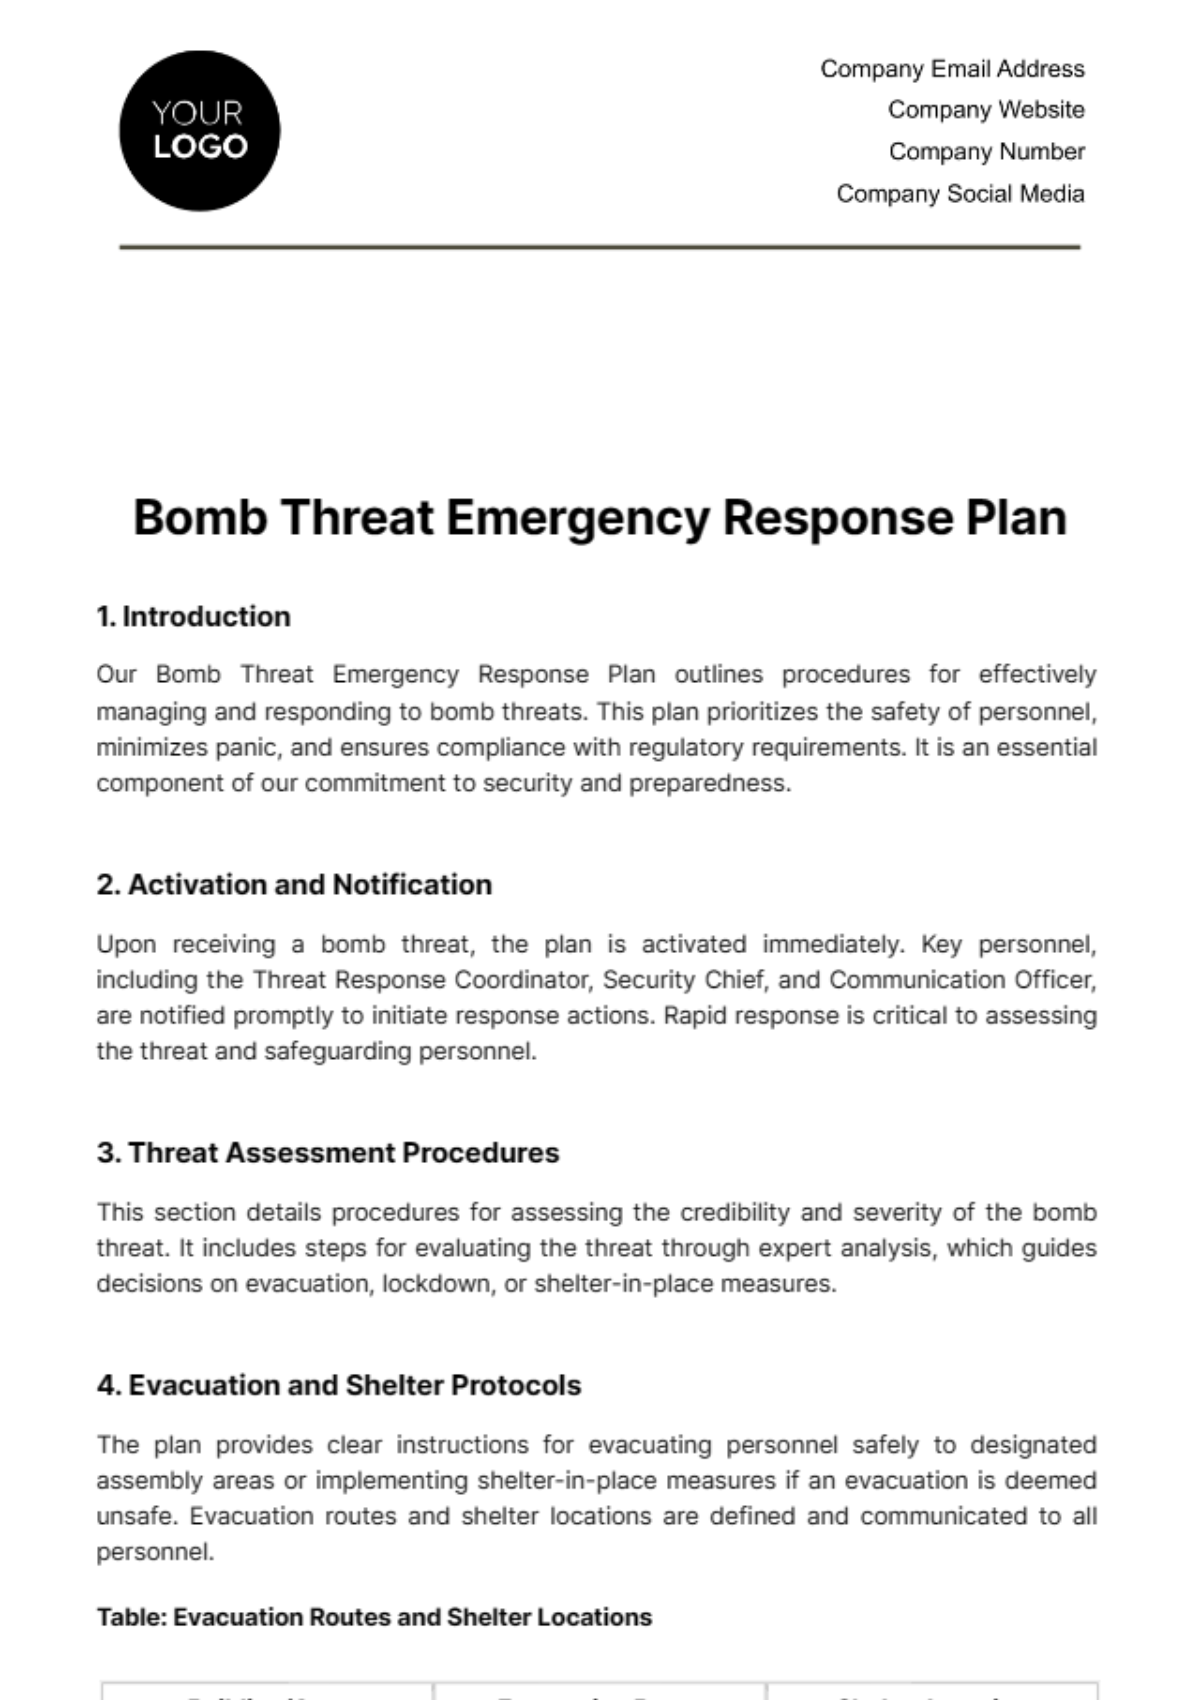 Bomb Threat Emergency Response Plan Template